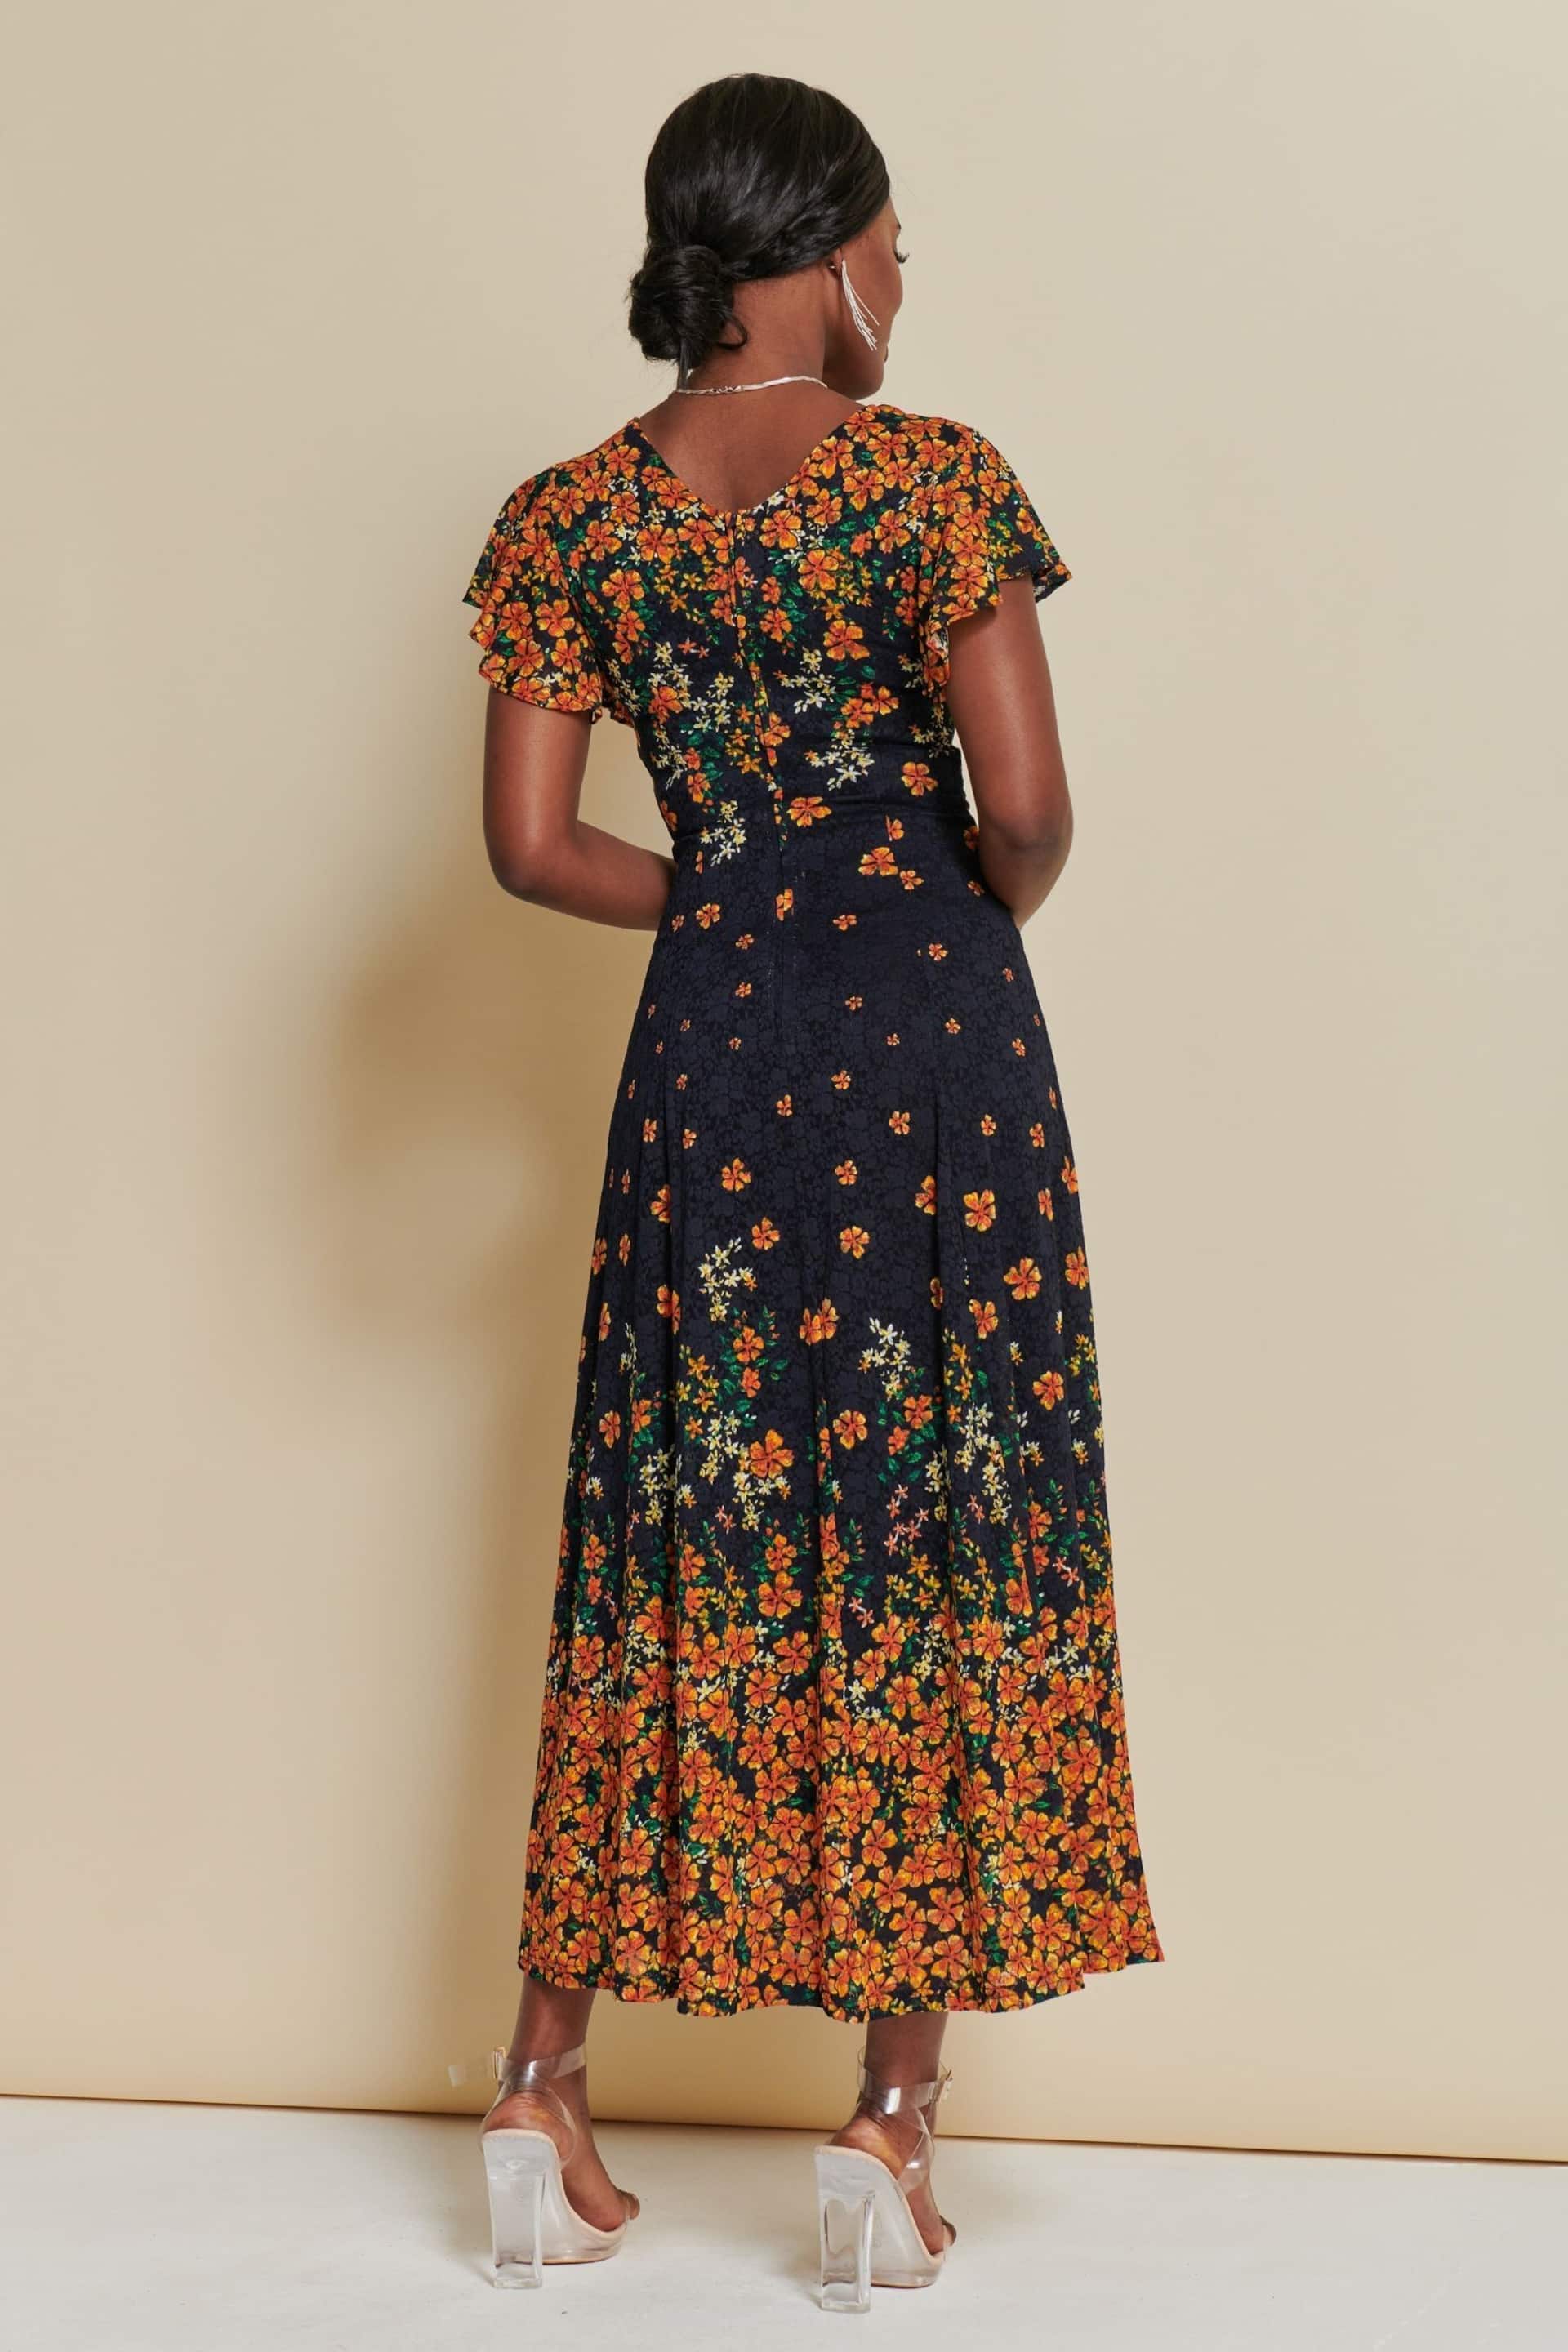 Jolie Moi Orange Lace Floral Print Fit & Flare Maxi Dress - Image 2 of 7